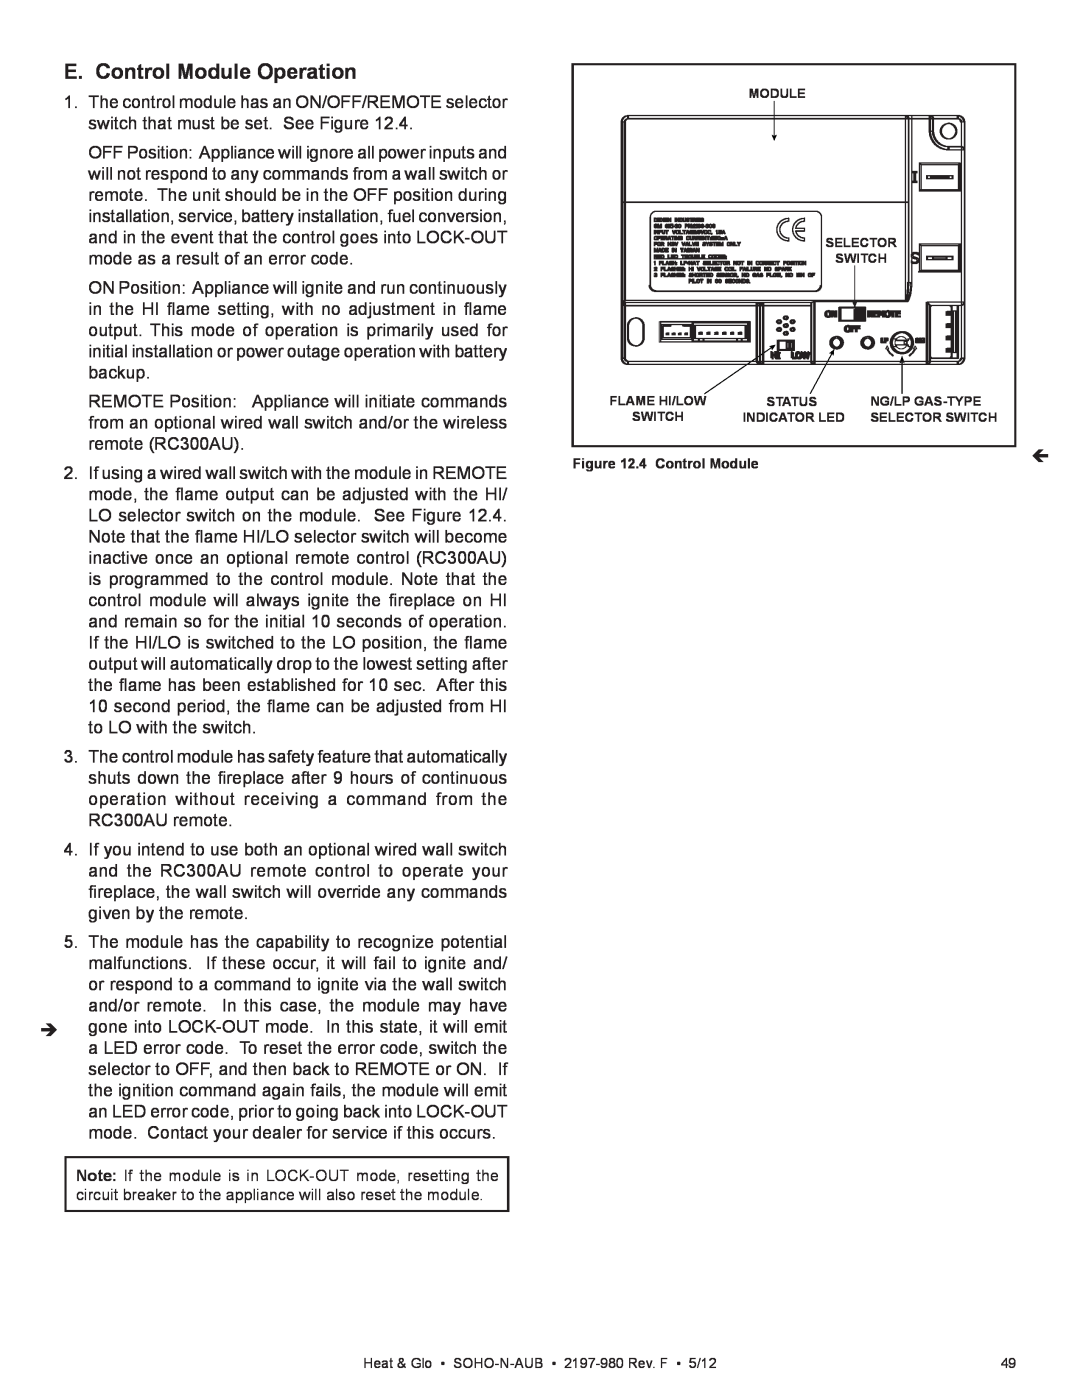 Heat & Glo LifeStyle 2197-980 owner manual E. Control Module Operation, 4 Control Module 